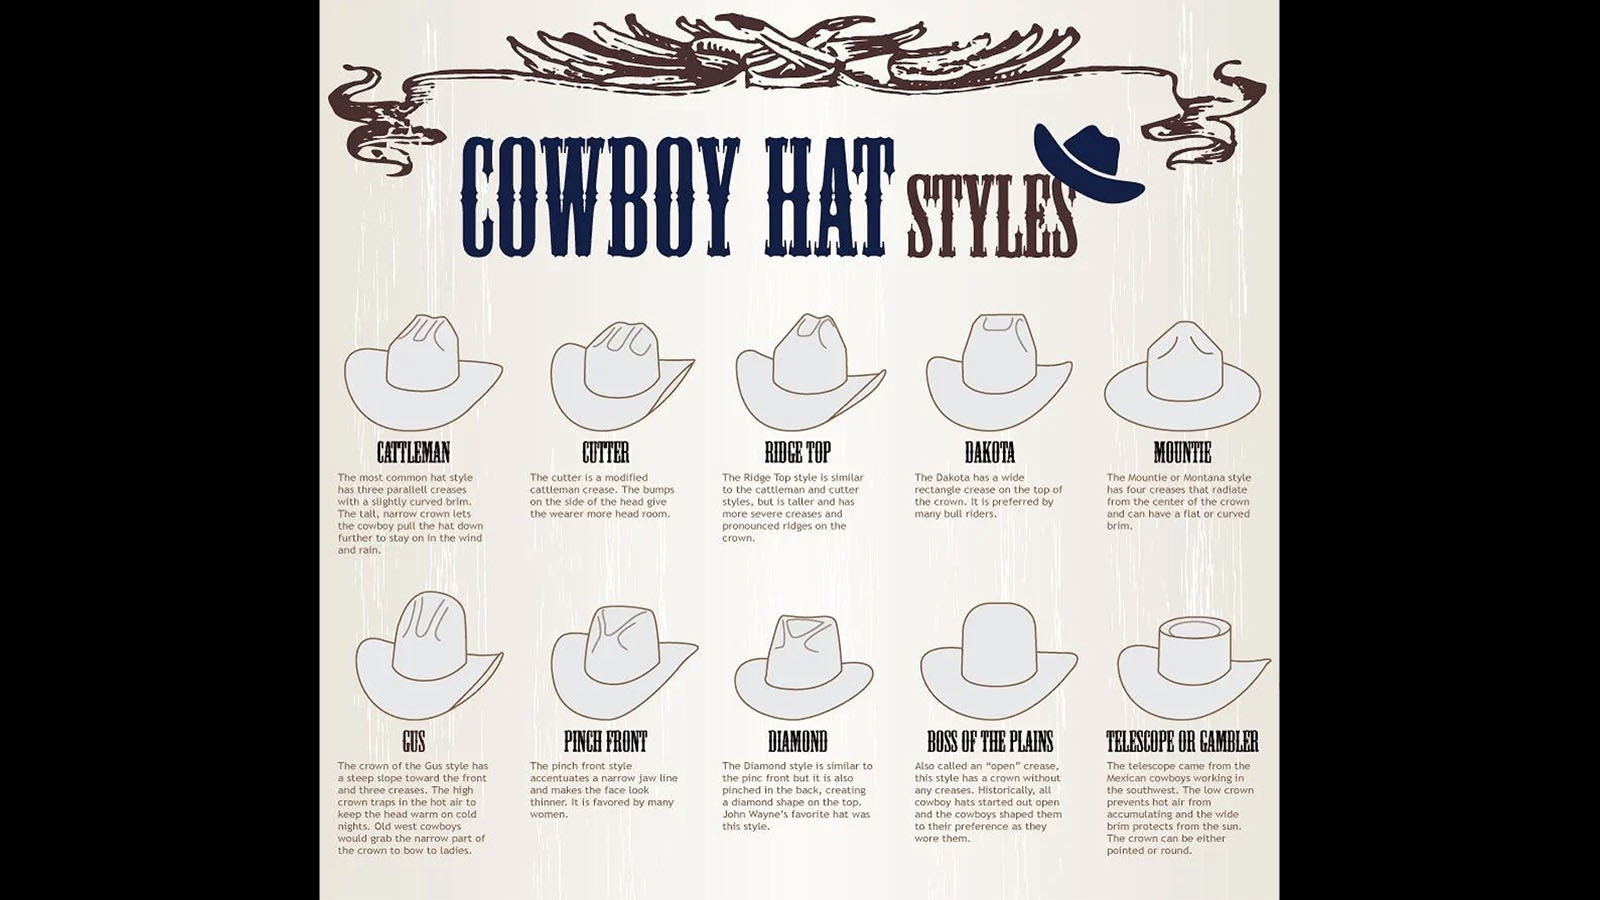 Cowboy hat styles, a primer.